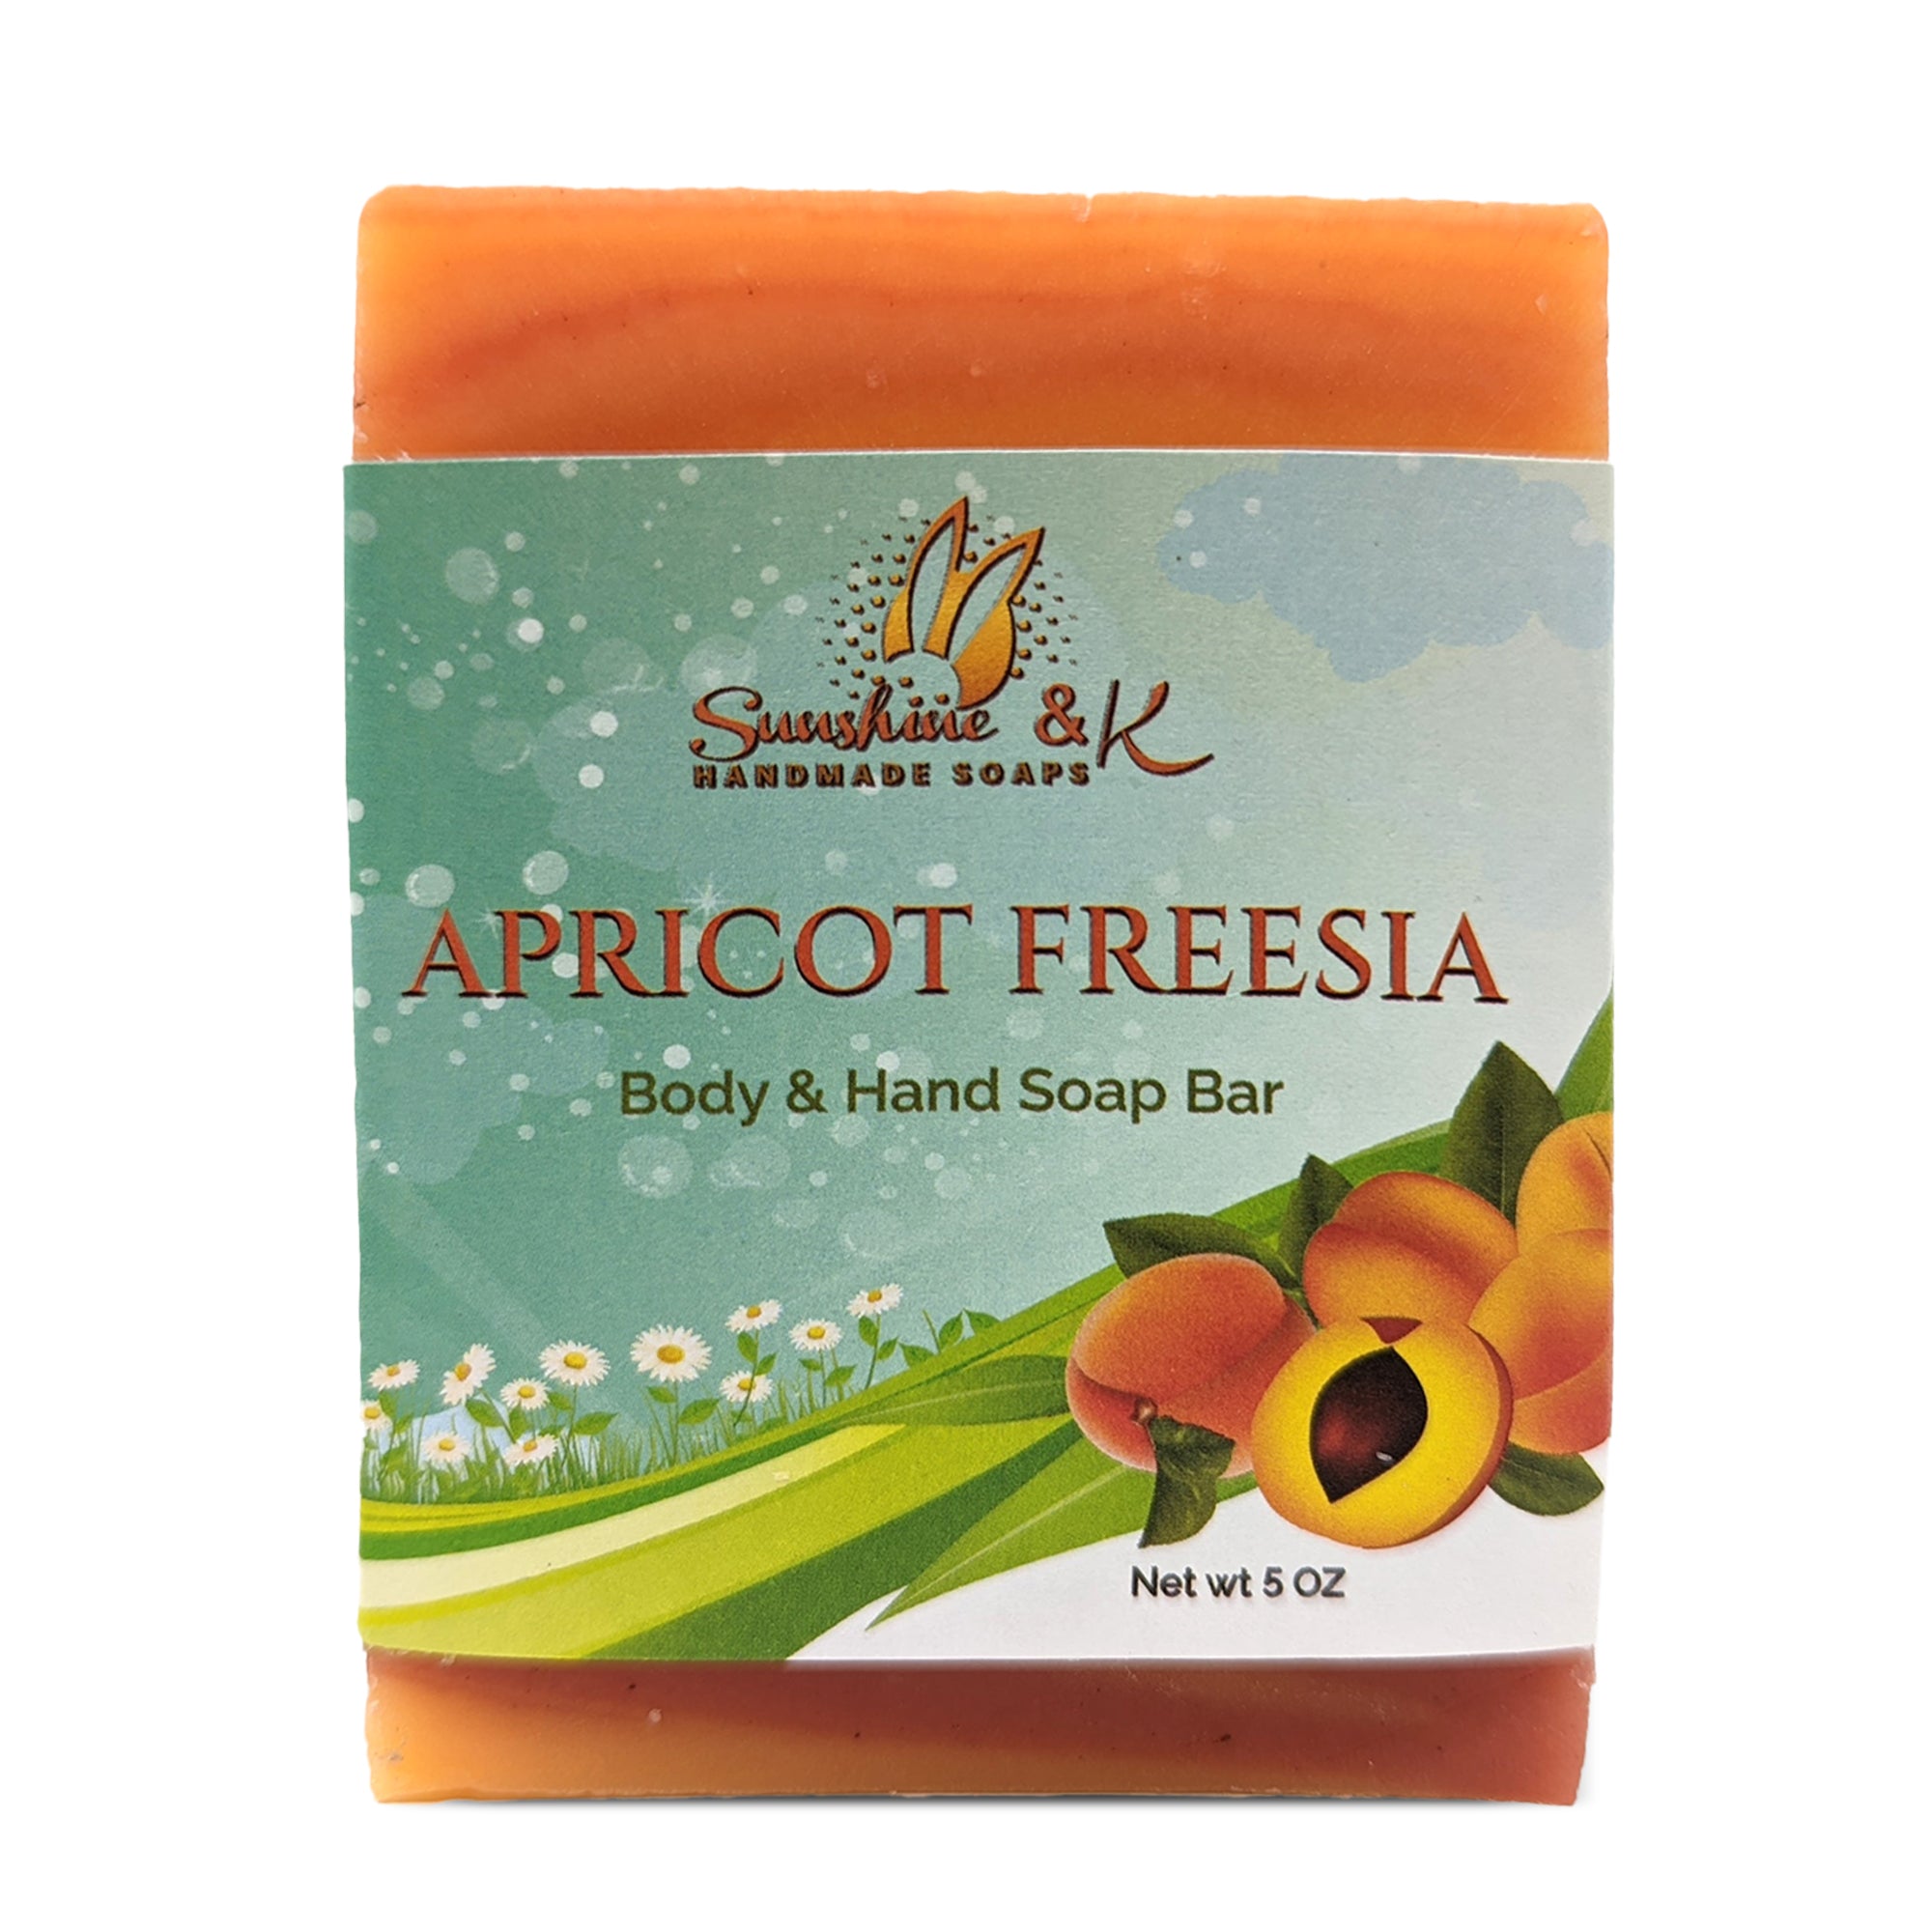 Apricot Freesia Bar Soap - Body & Face Bar Soap, Handmade Bath Soap, Moisturizing Bar Soap With Beeswax, Rice Bran Oil, & Natural Base Oils, Natural Soap Bars, 5 oz, Sunshine & K Handmade Soaps - sunshine-handmade-soaps